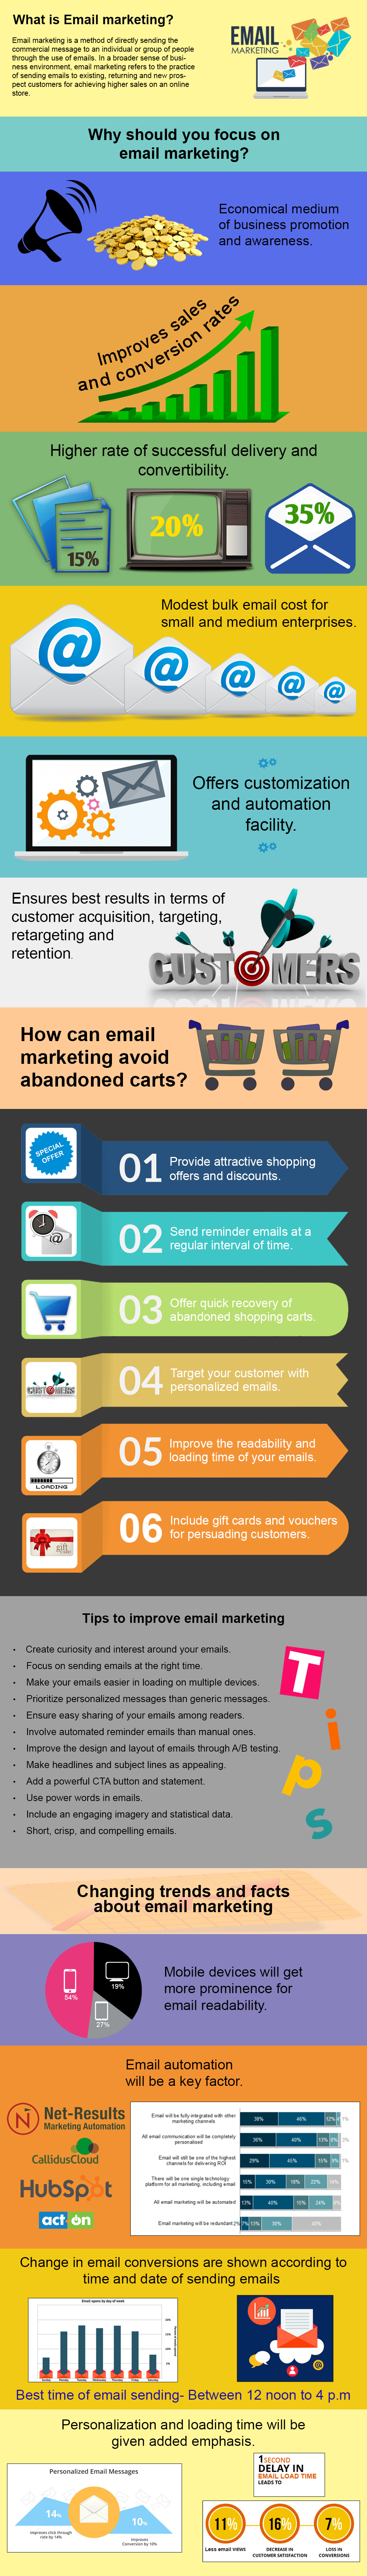 Konwersje e-commerce za pośrednictwem e-mail marketingu | knowband